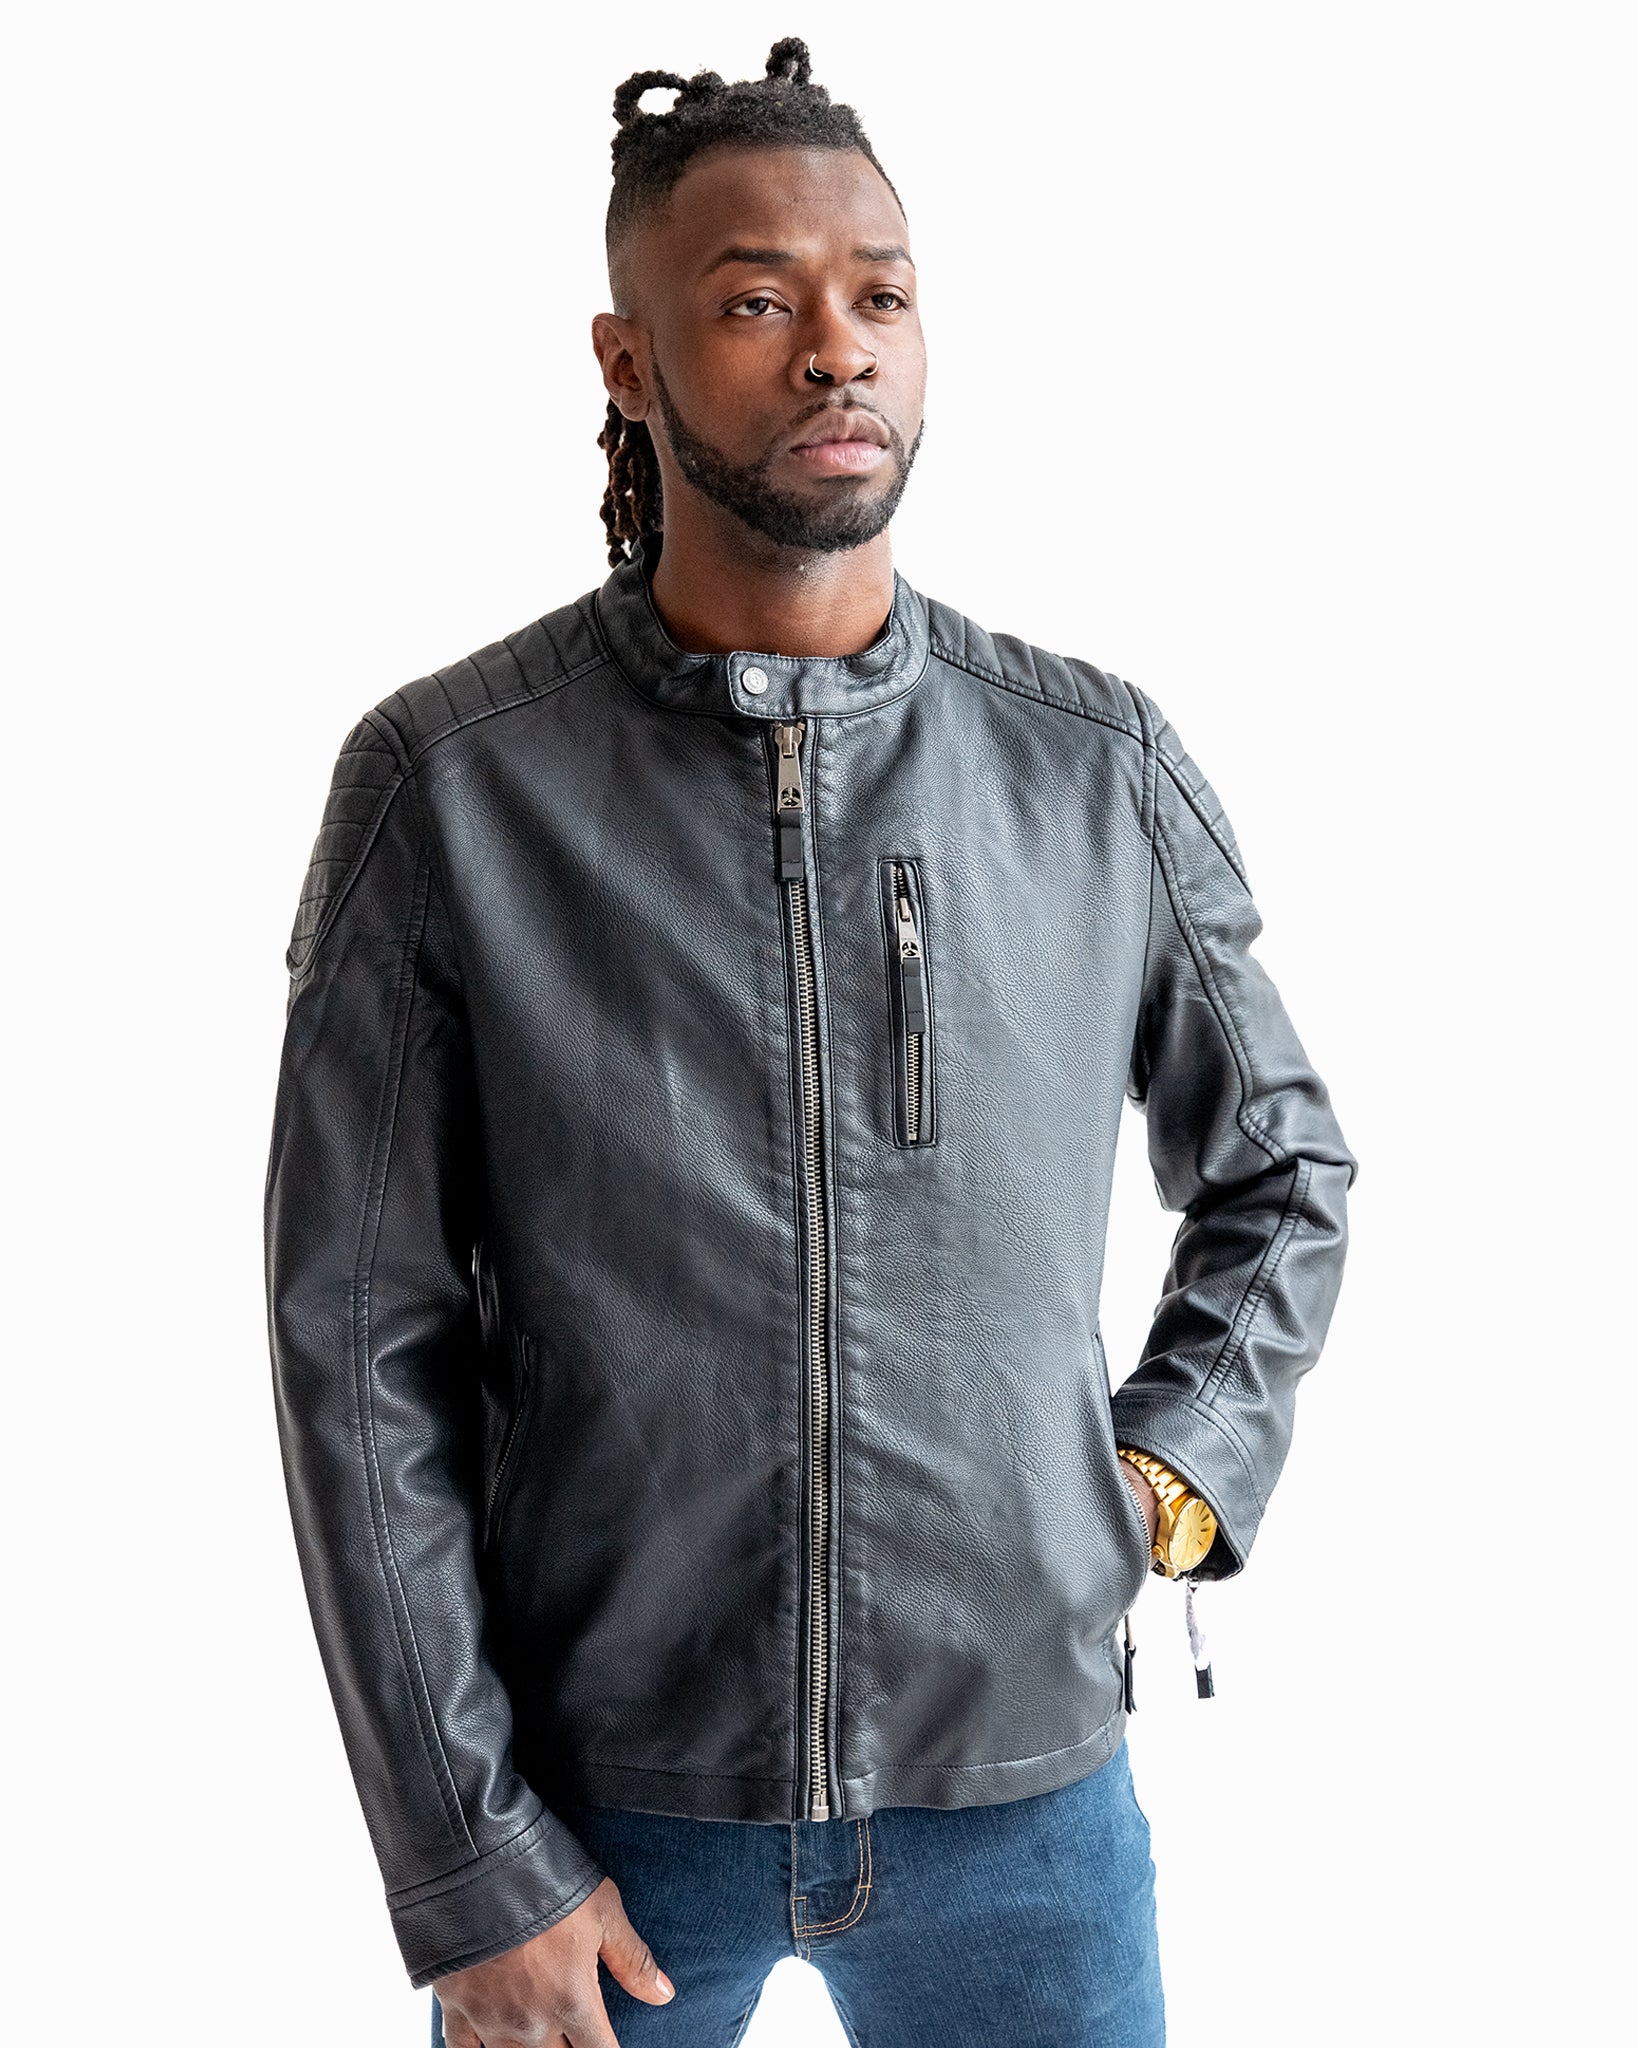 Men's Sleek Black Vegan Leather Jacket | Whet Blu | RebelsMarket